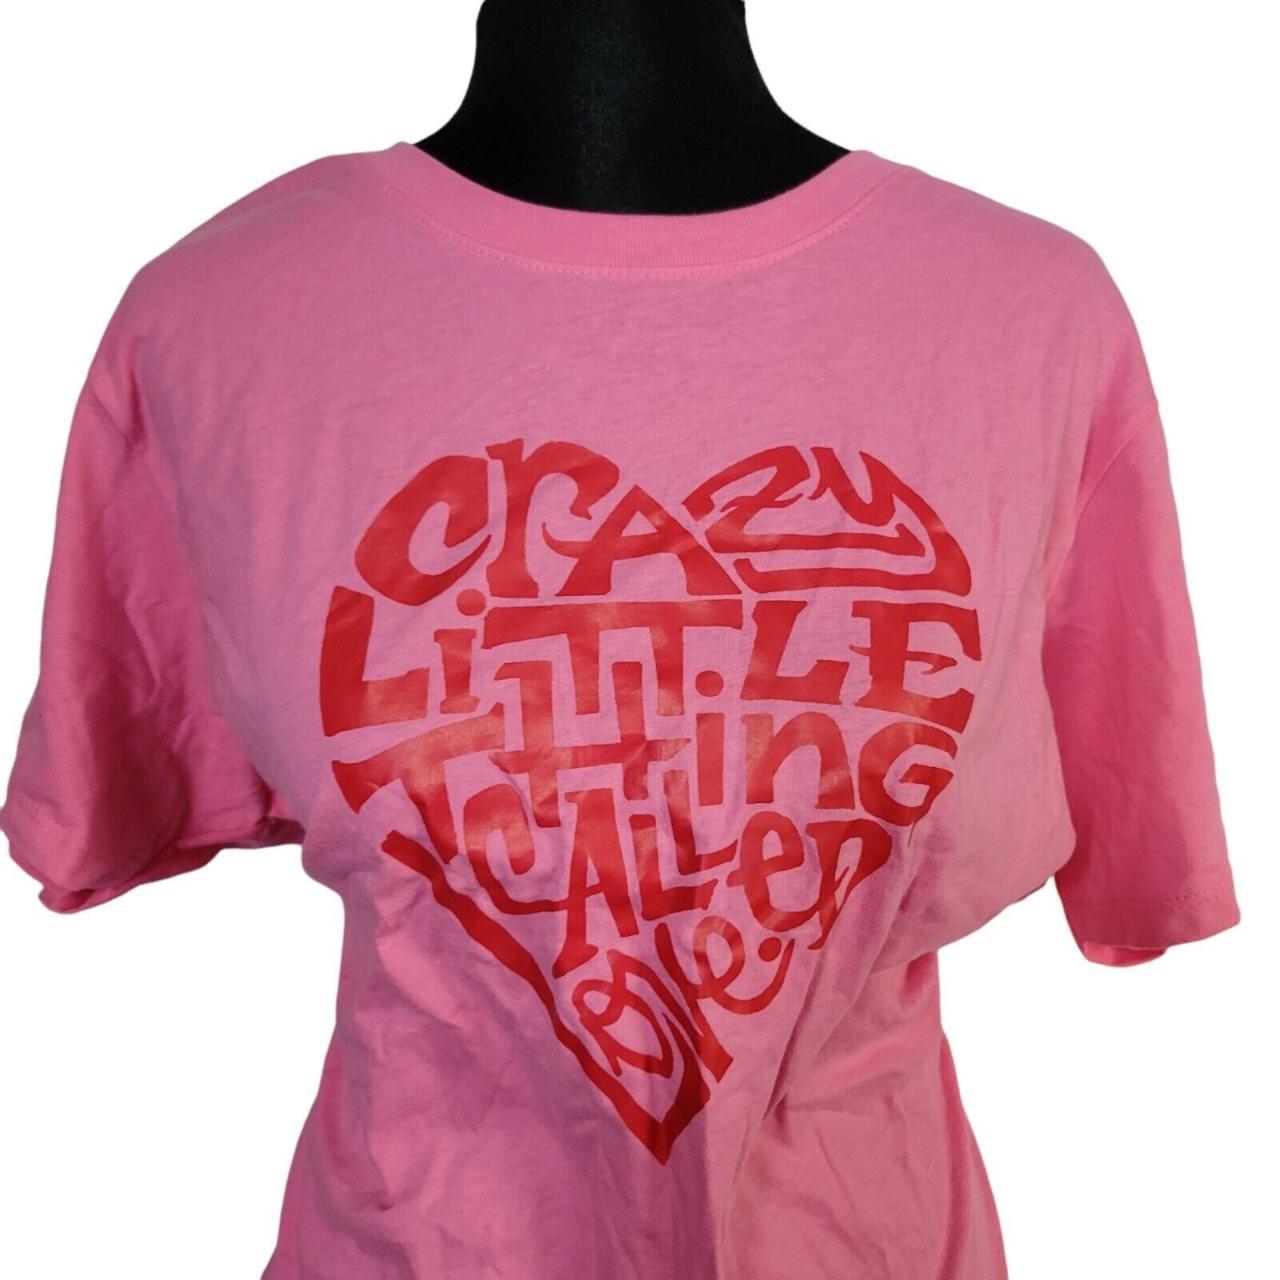 Product Image 4 - Women's LA POP ART Tshirt.